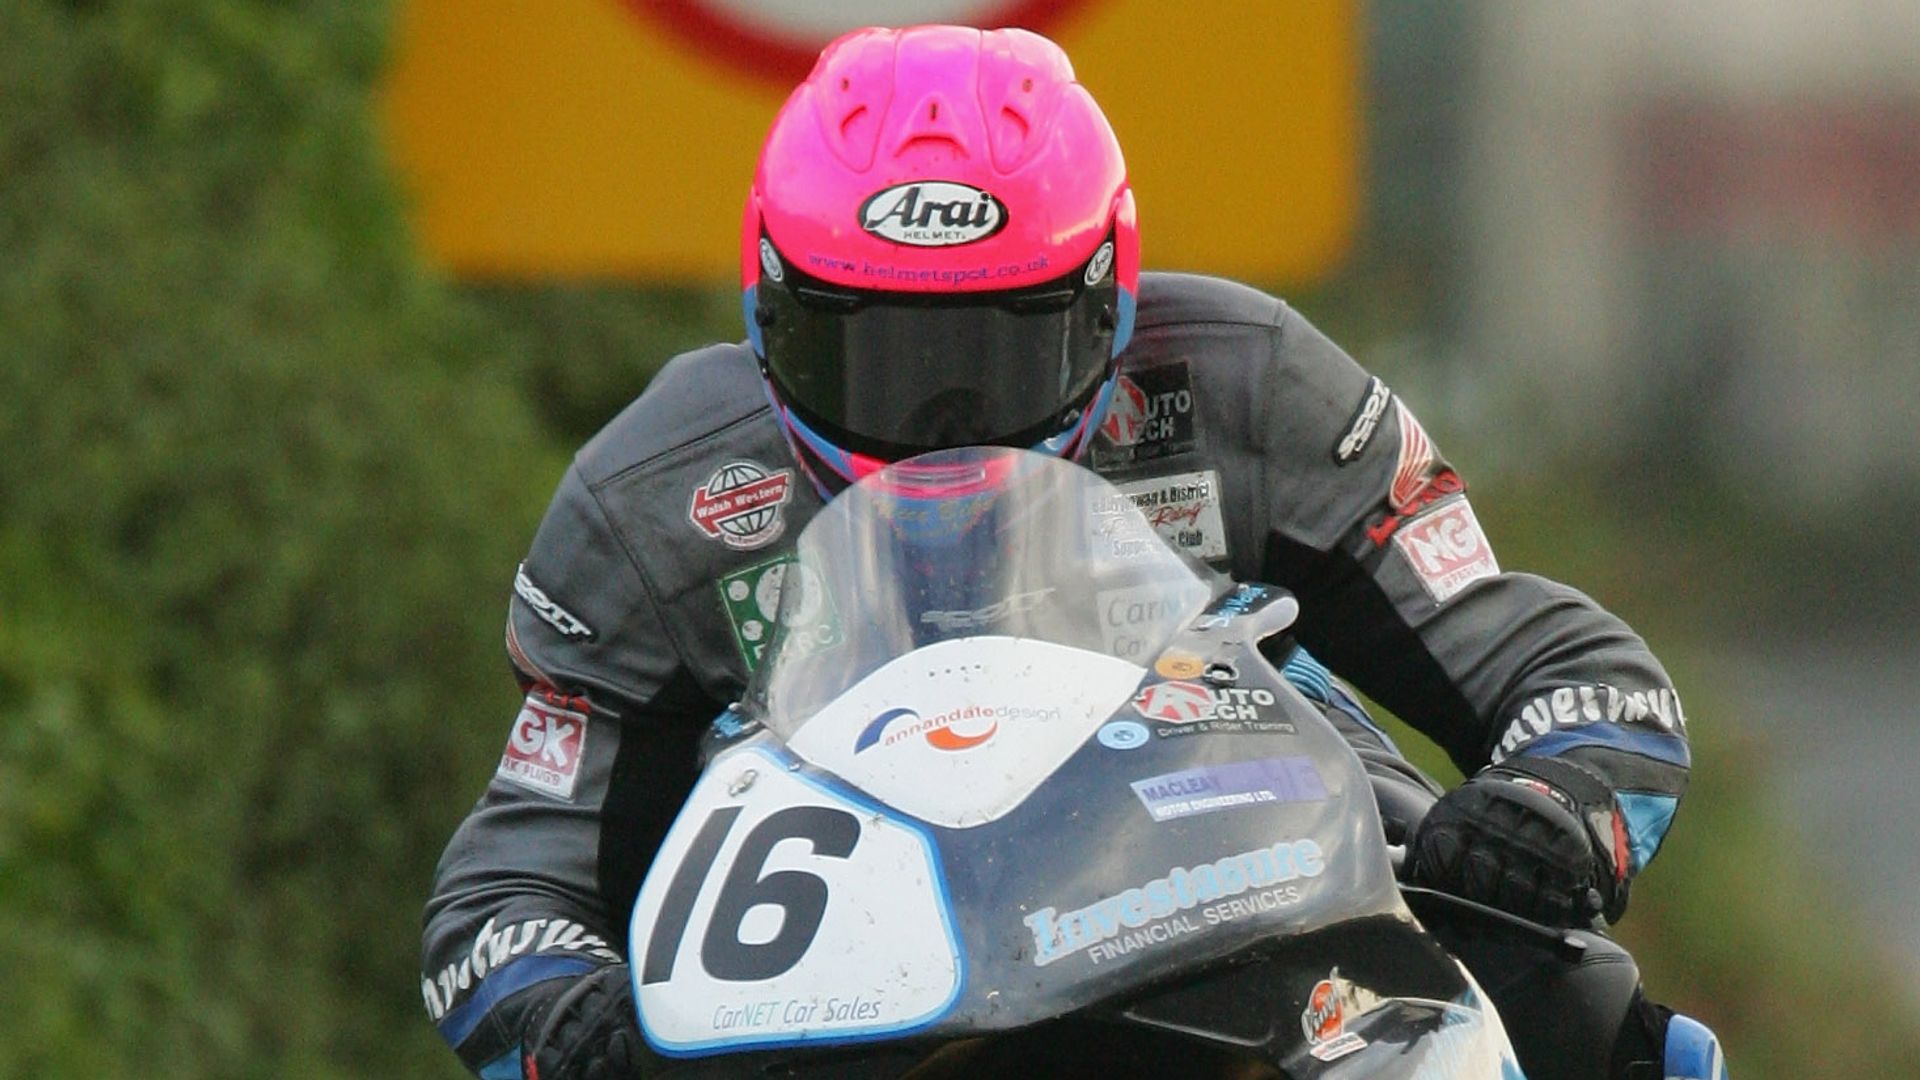 Northern Irish rider Morgan dies after Isle of Man TT accident